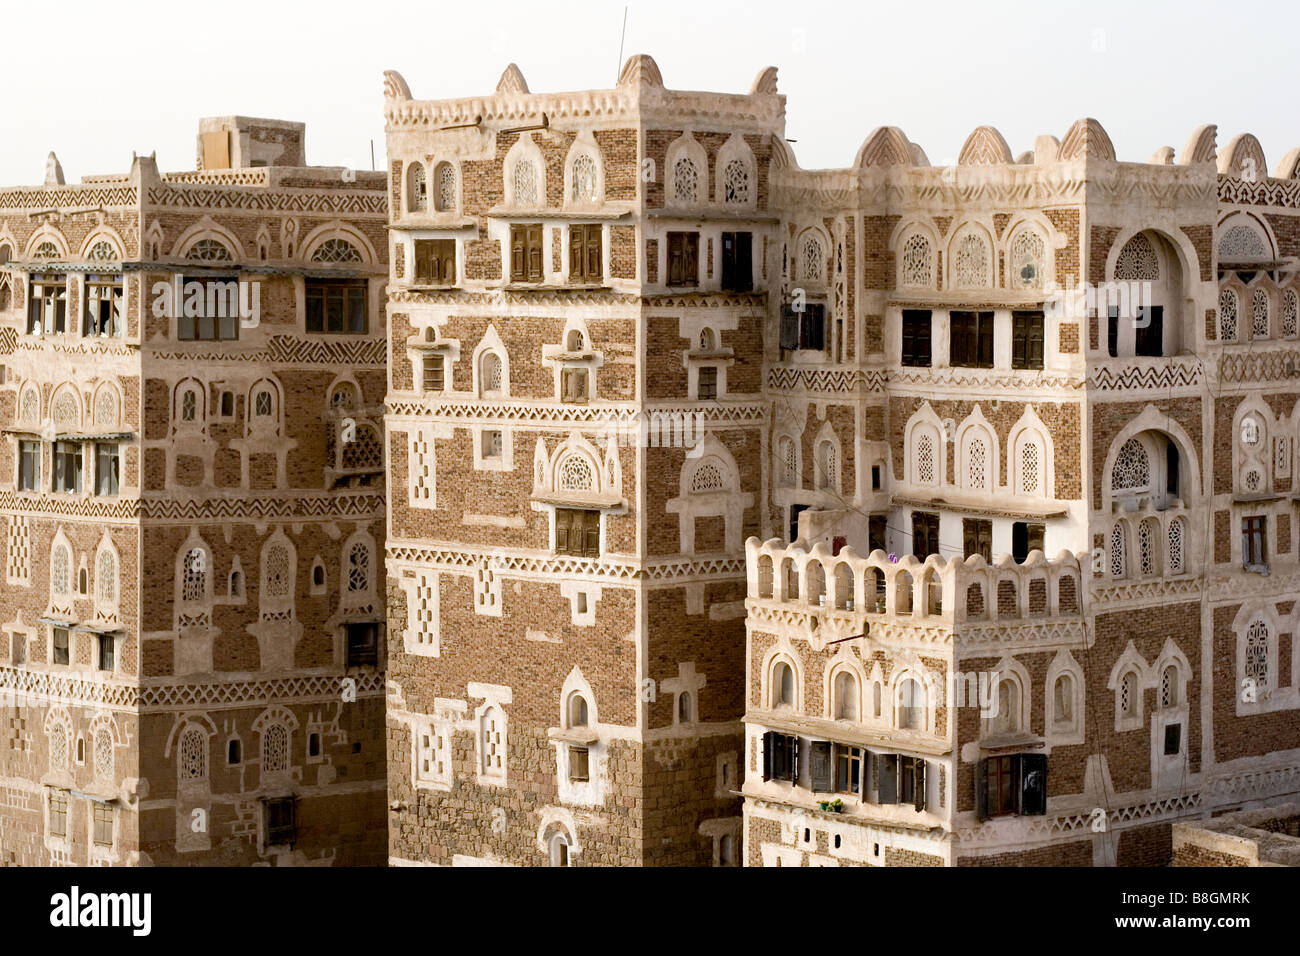 multi-story mud houses in sana'a yemen Stock Photo